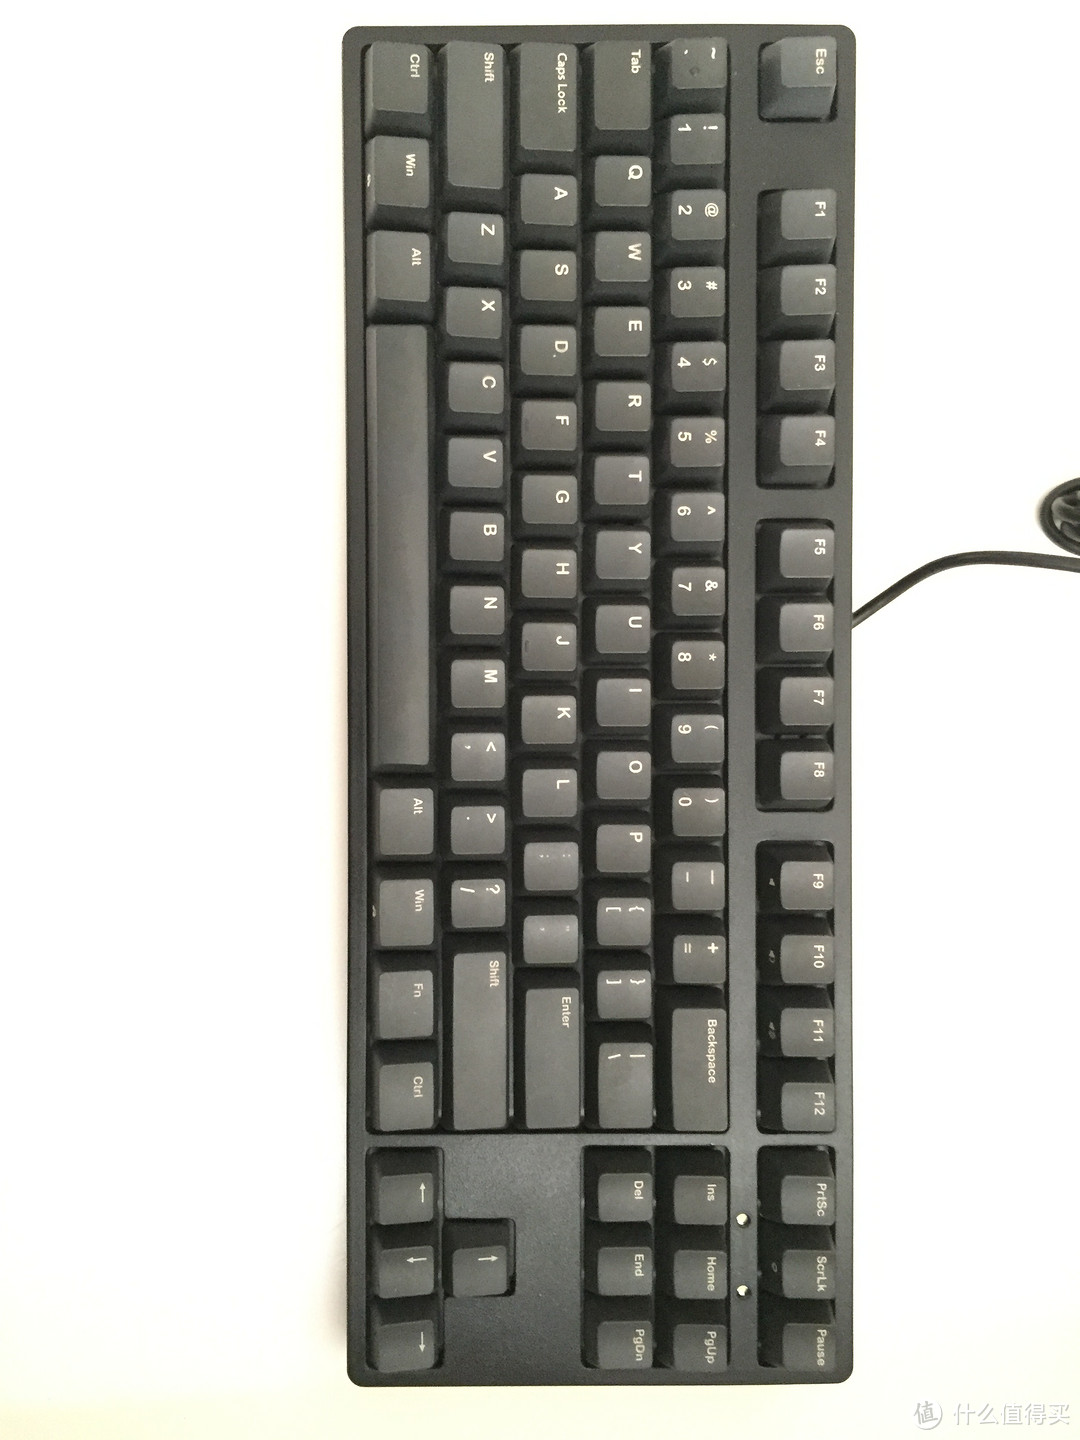 Ikbc C87机械键盘简单开箱